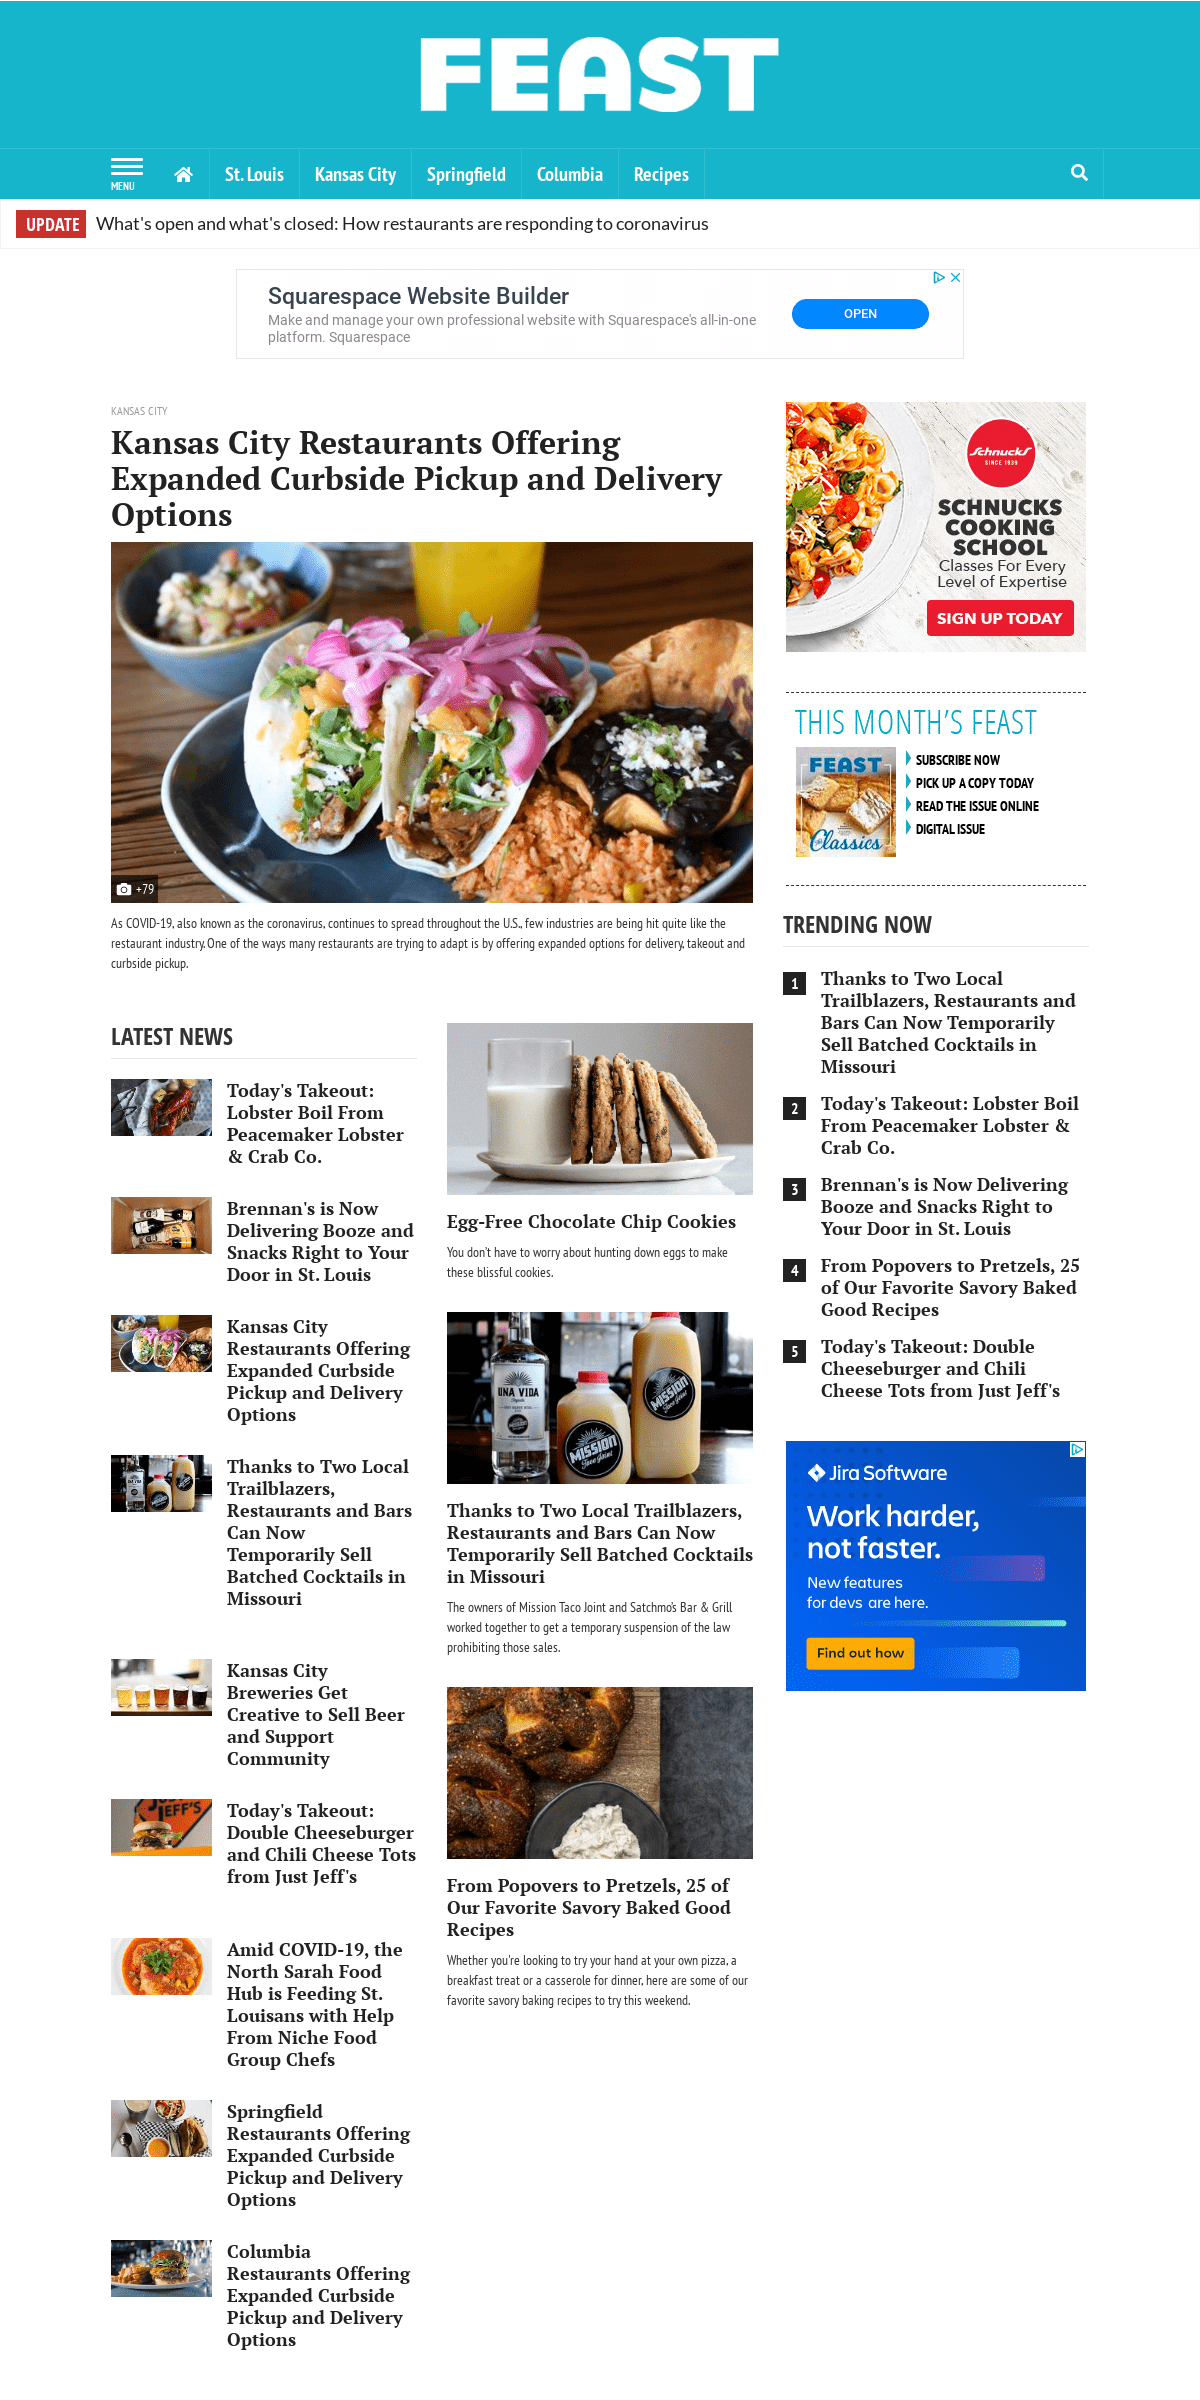 A complete backup of feastmagazine.com